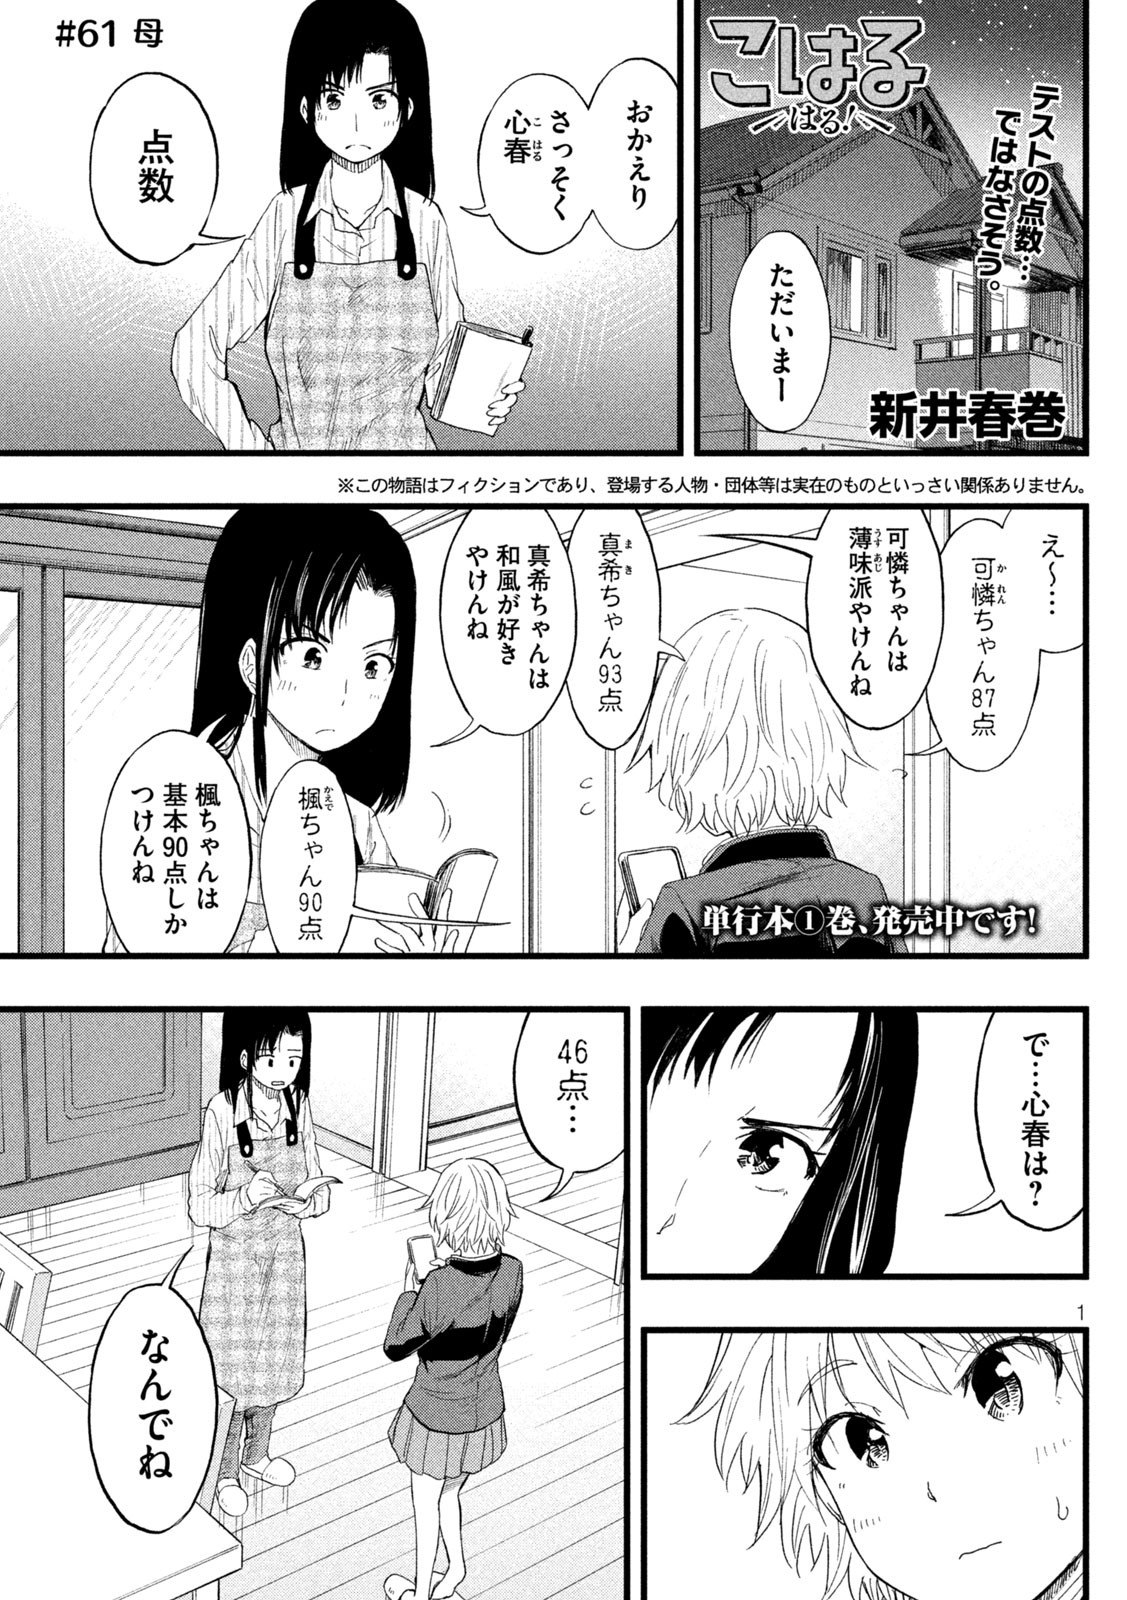 Koharu haru! - Chapter 61 - Page 1